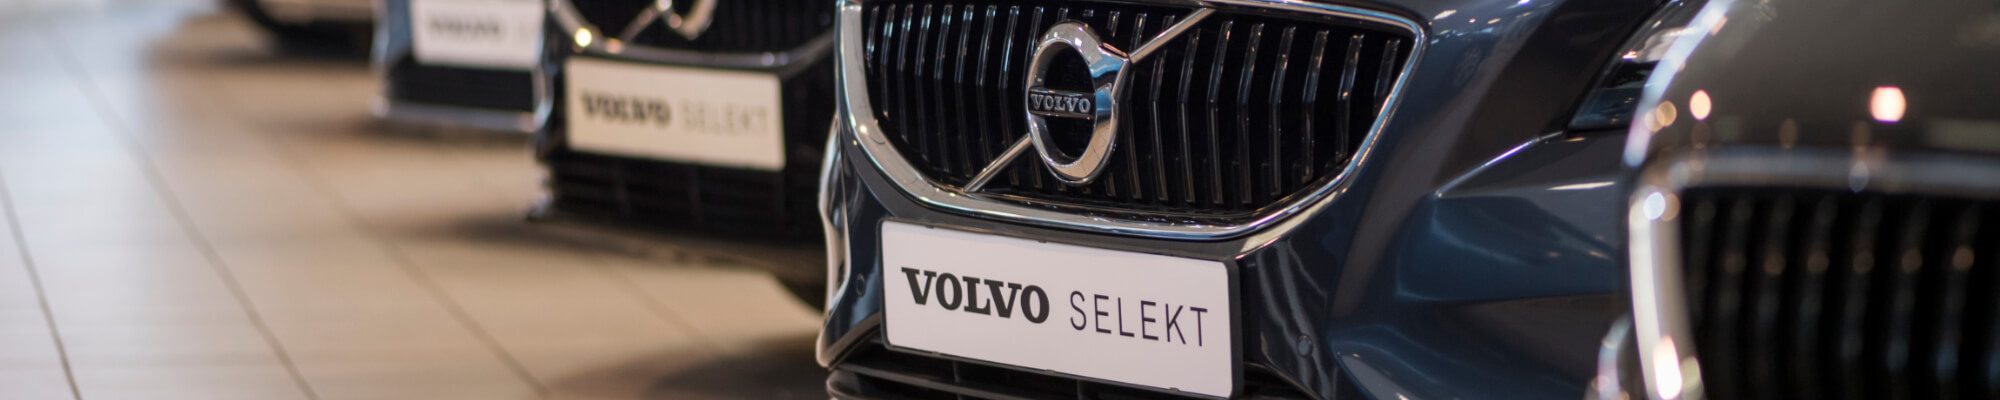 Volvo Bangarage Selekt